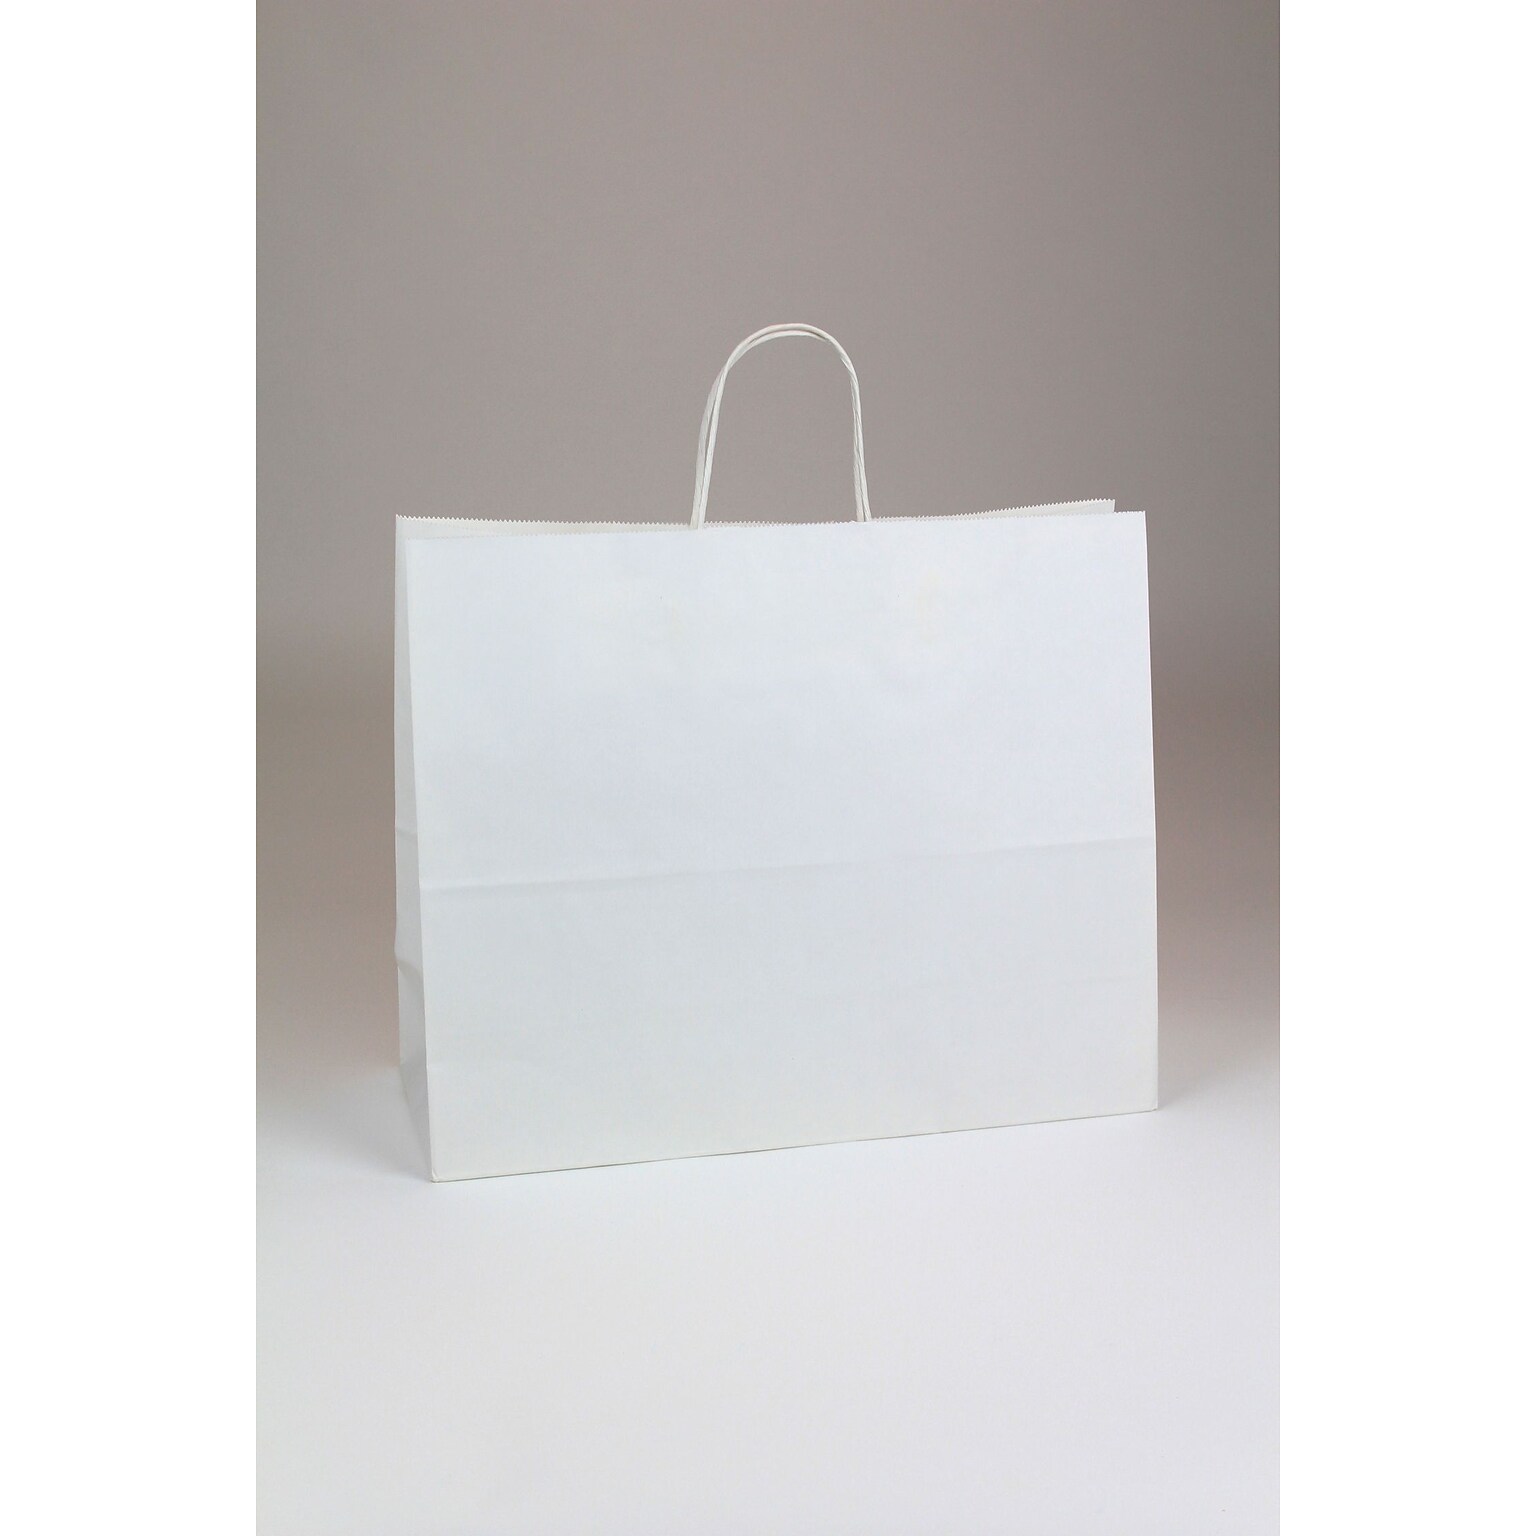 Vouge Shopper Kraft Paper Shopping Bag, White, 250 Bags/Carton (WHITE16613)